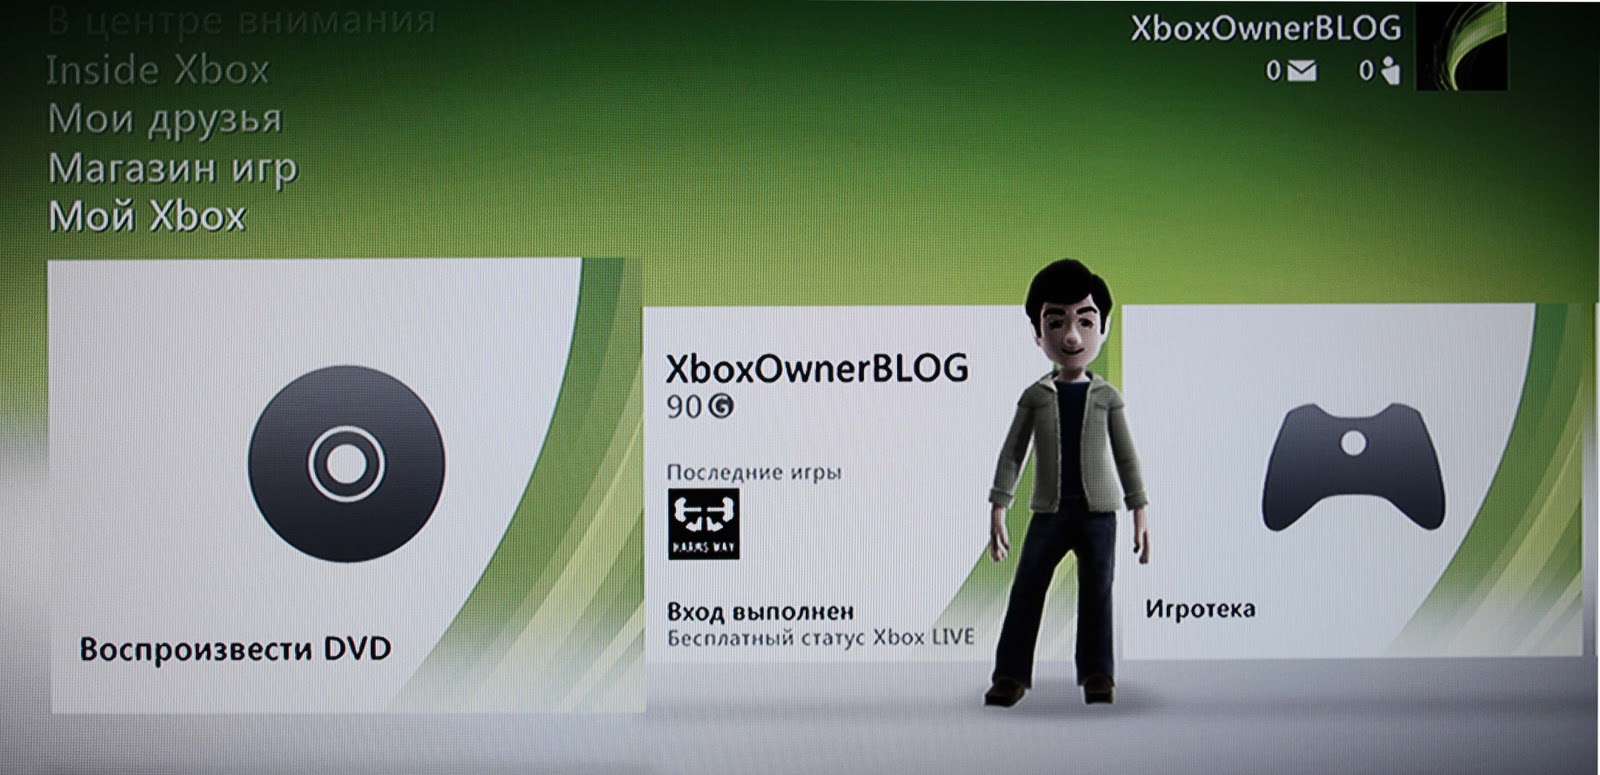 Xbox live ru. Xbox 2010 года. Хбокс лайв кнопки. Индификатор устройства хбокс лайв. Игра иксбокс мой ресторан.